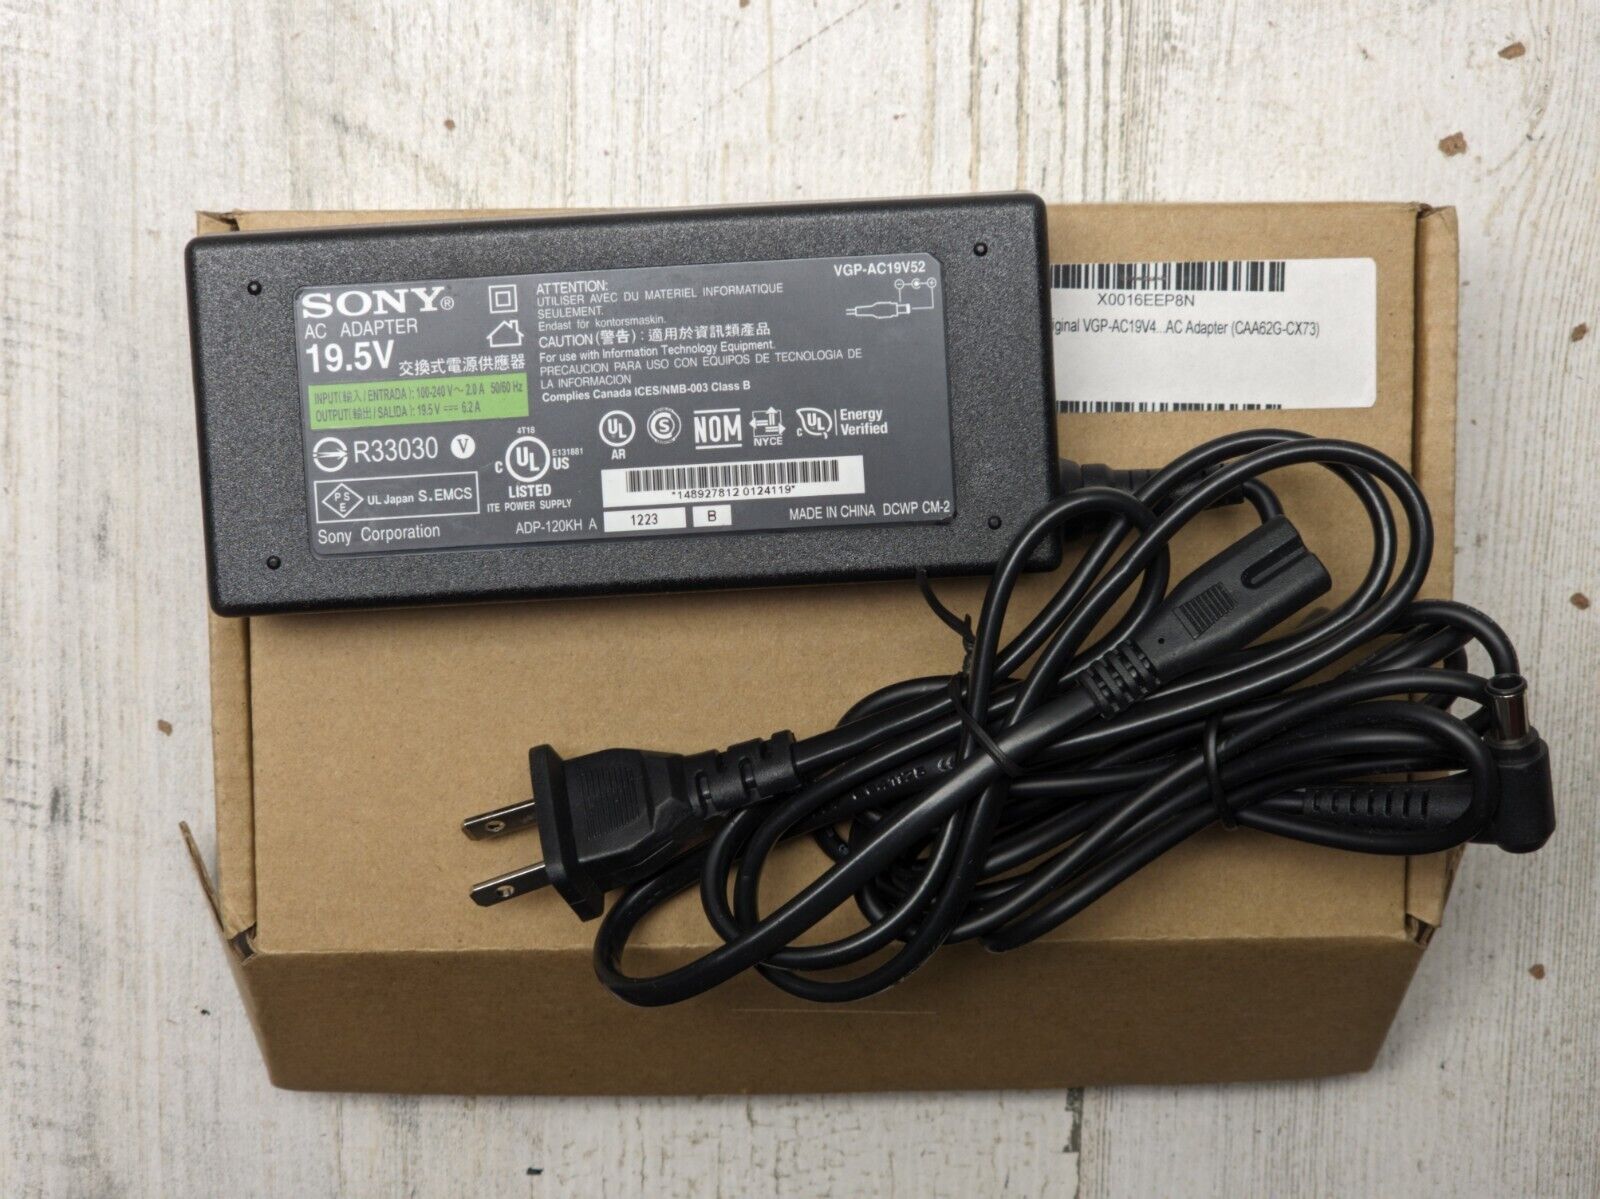 Original Sony 120W Charger VGP-AC19V52 For Sony Vaio Compatible VGP-AC19V45